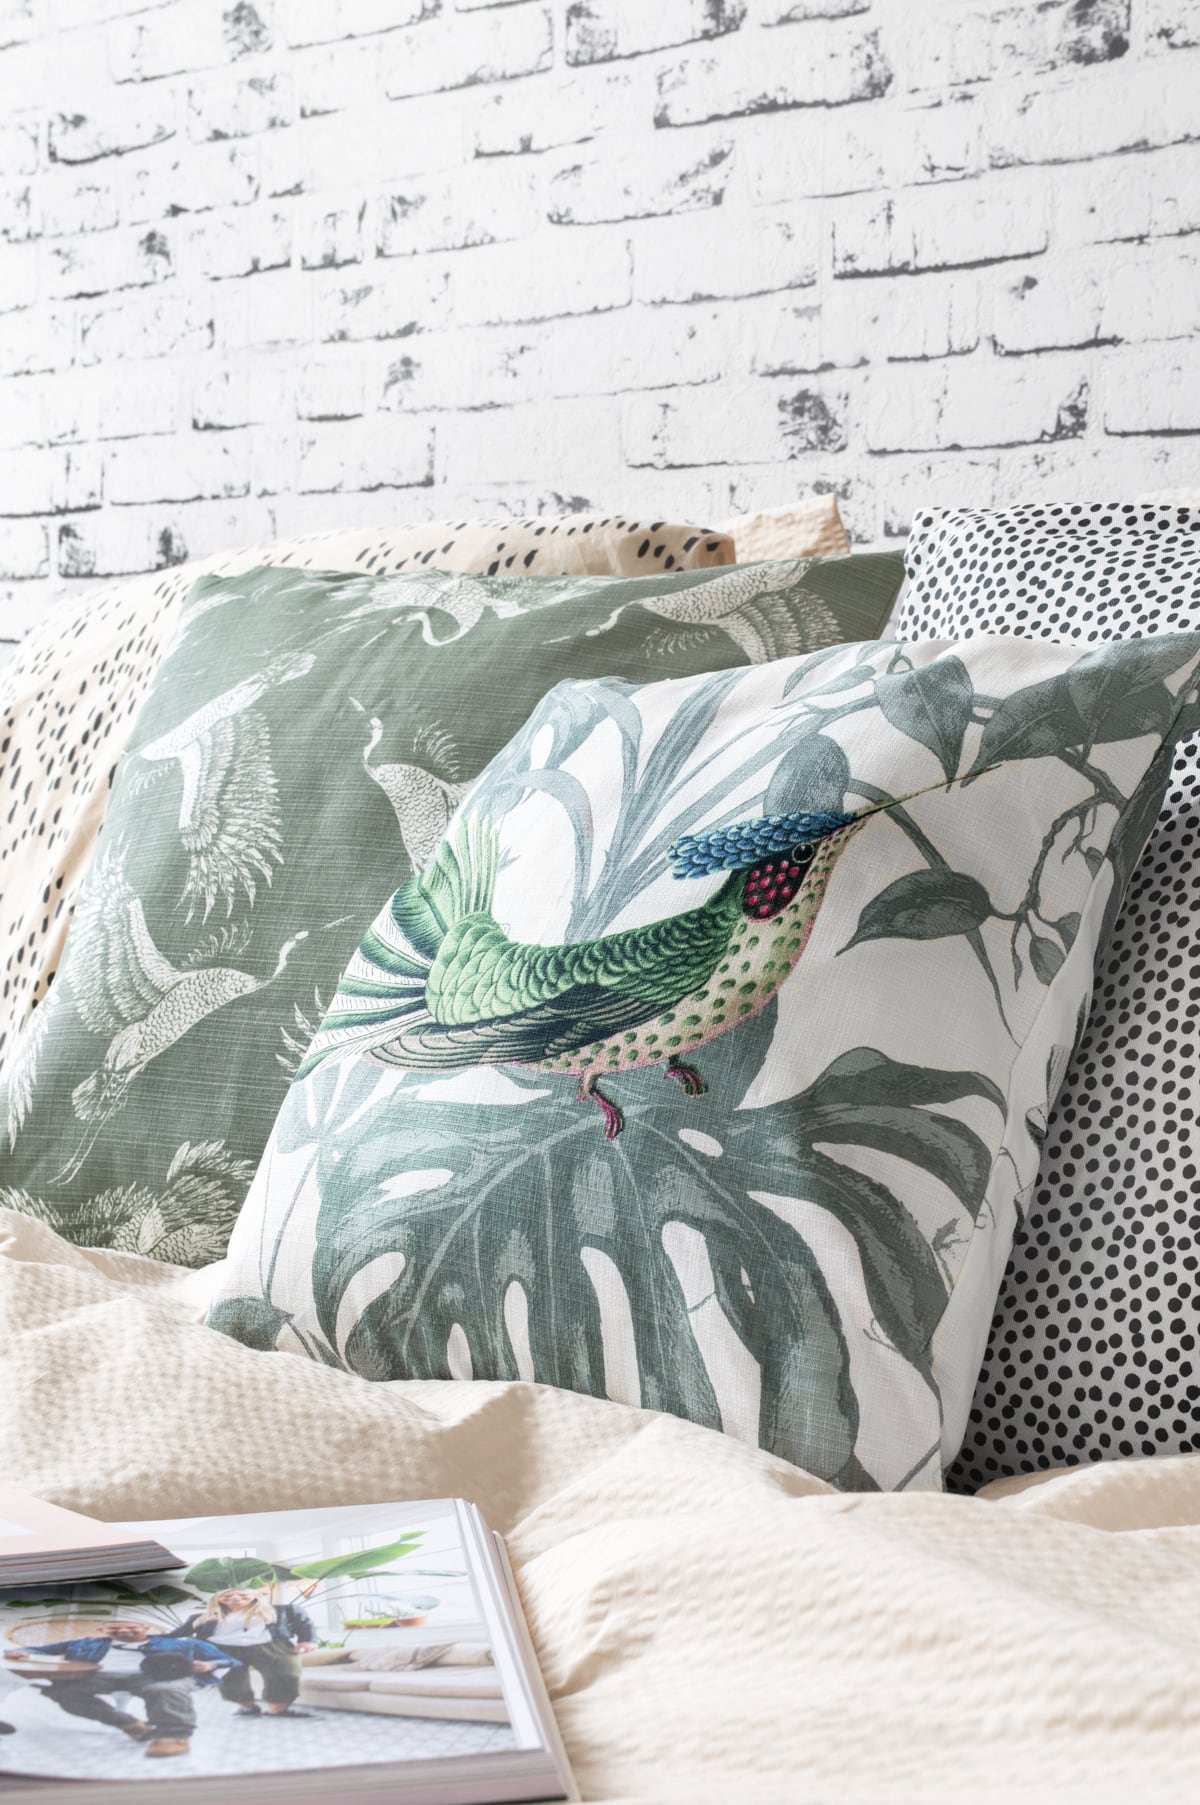 Kussen vogel styling prints in de slaapkamer - Tanja van Hoogdalem